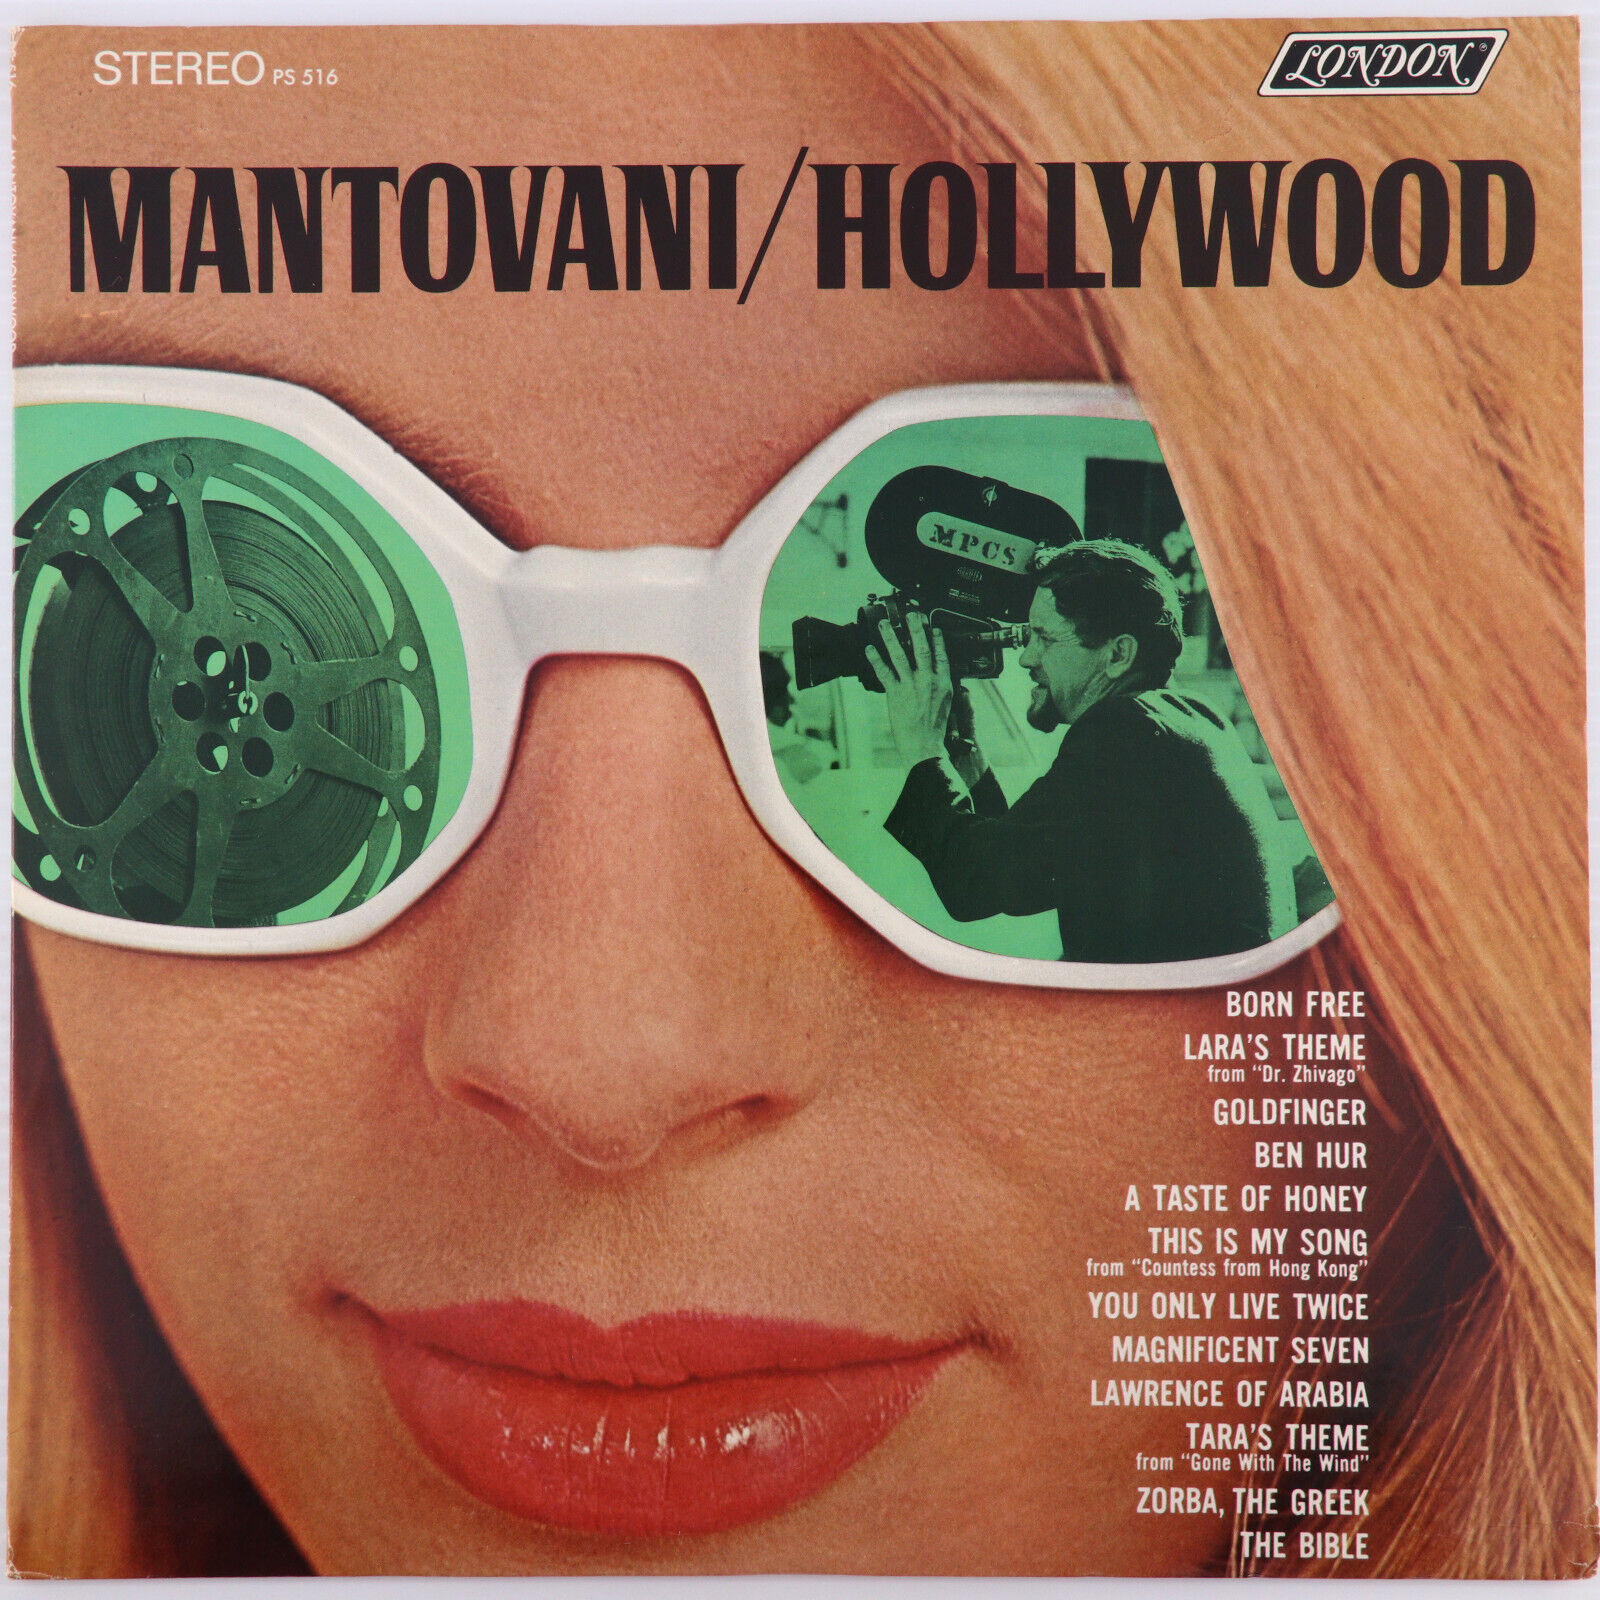 Mantovani – Hollywood - 1967 Stereo - London Record PRC Pressing PS 516 Vinyl LP